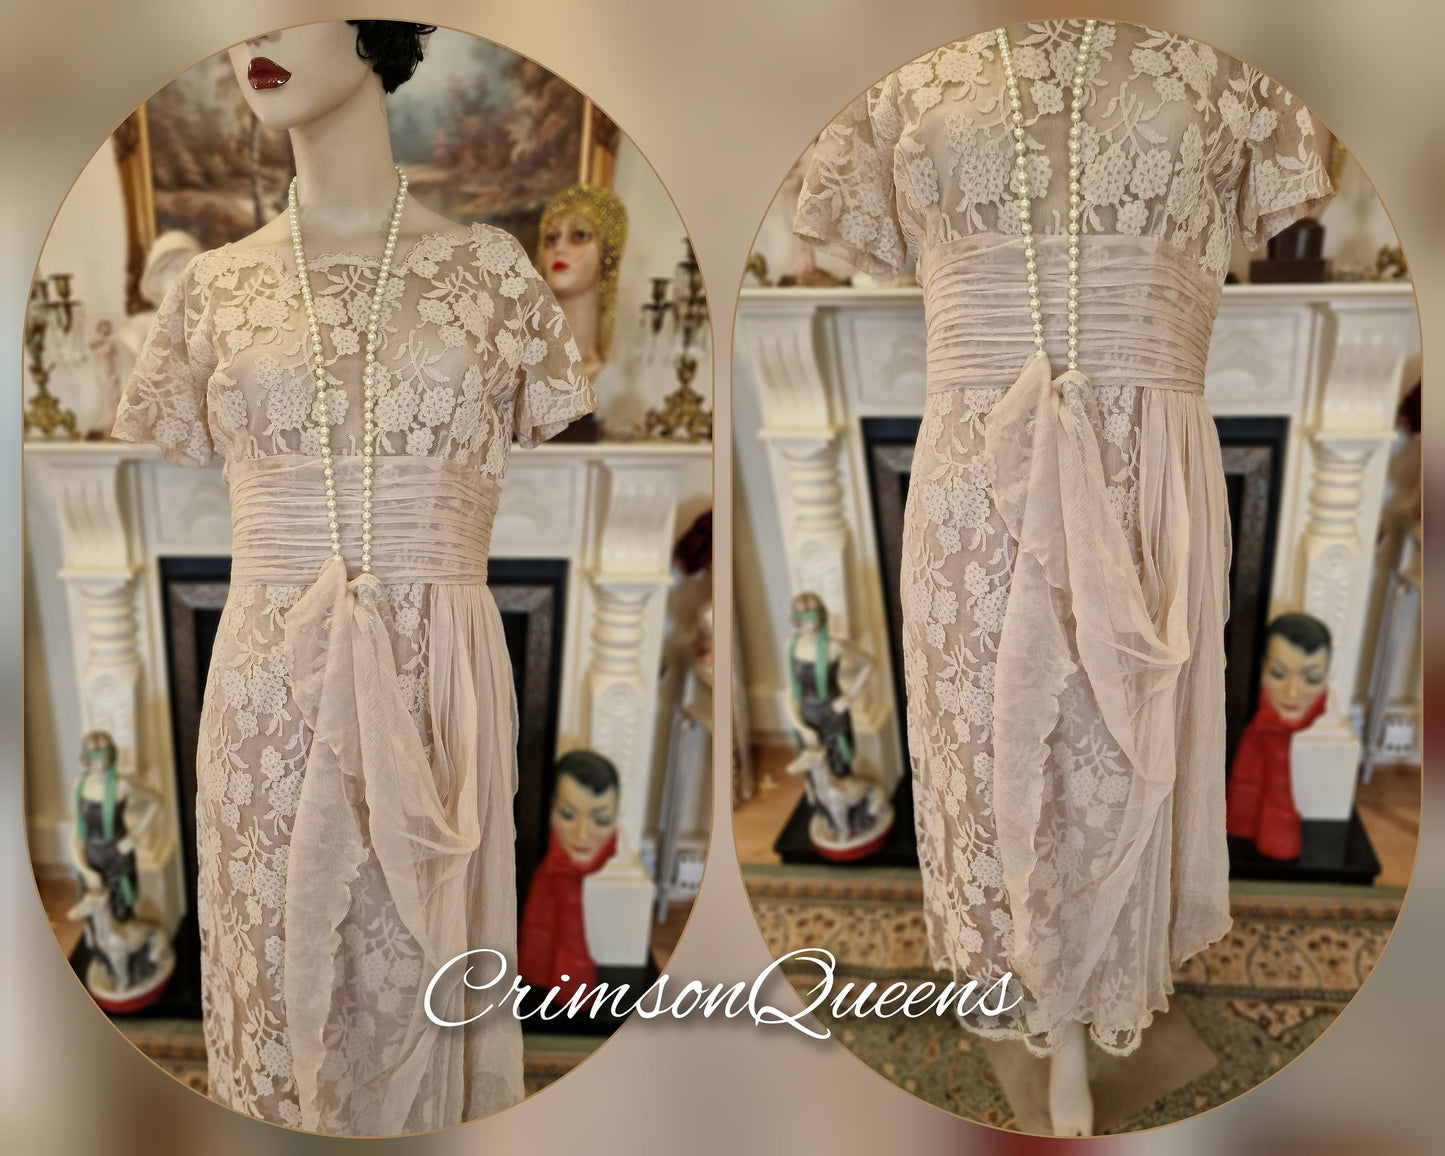 Downton Abbey dress Great Gatsby dress 1920s dress vintage lace dress 1920s garden suit dress coat duster size UK 12 US 8